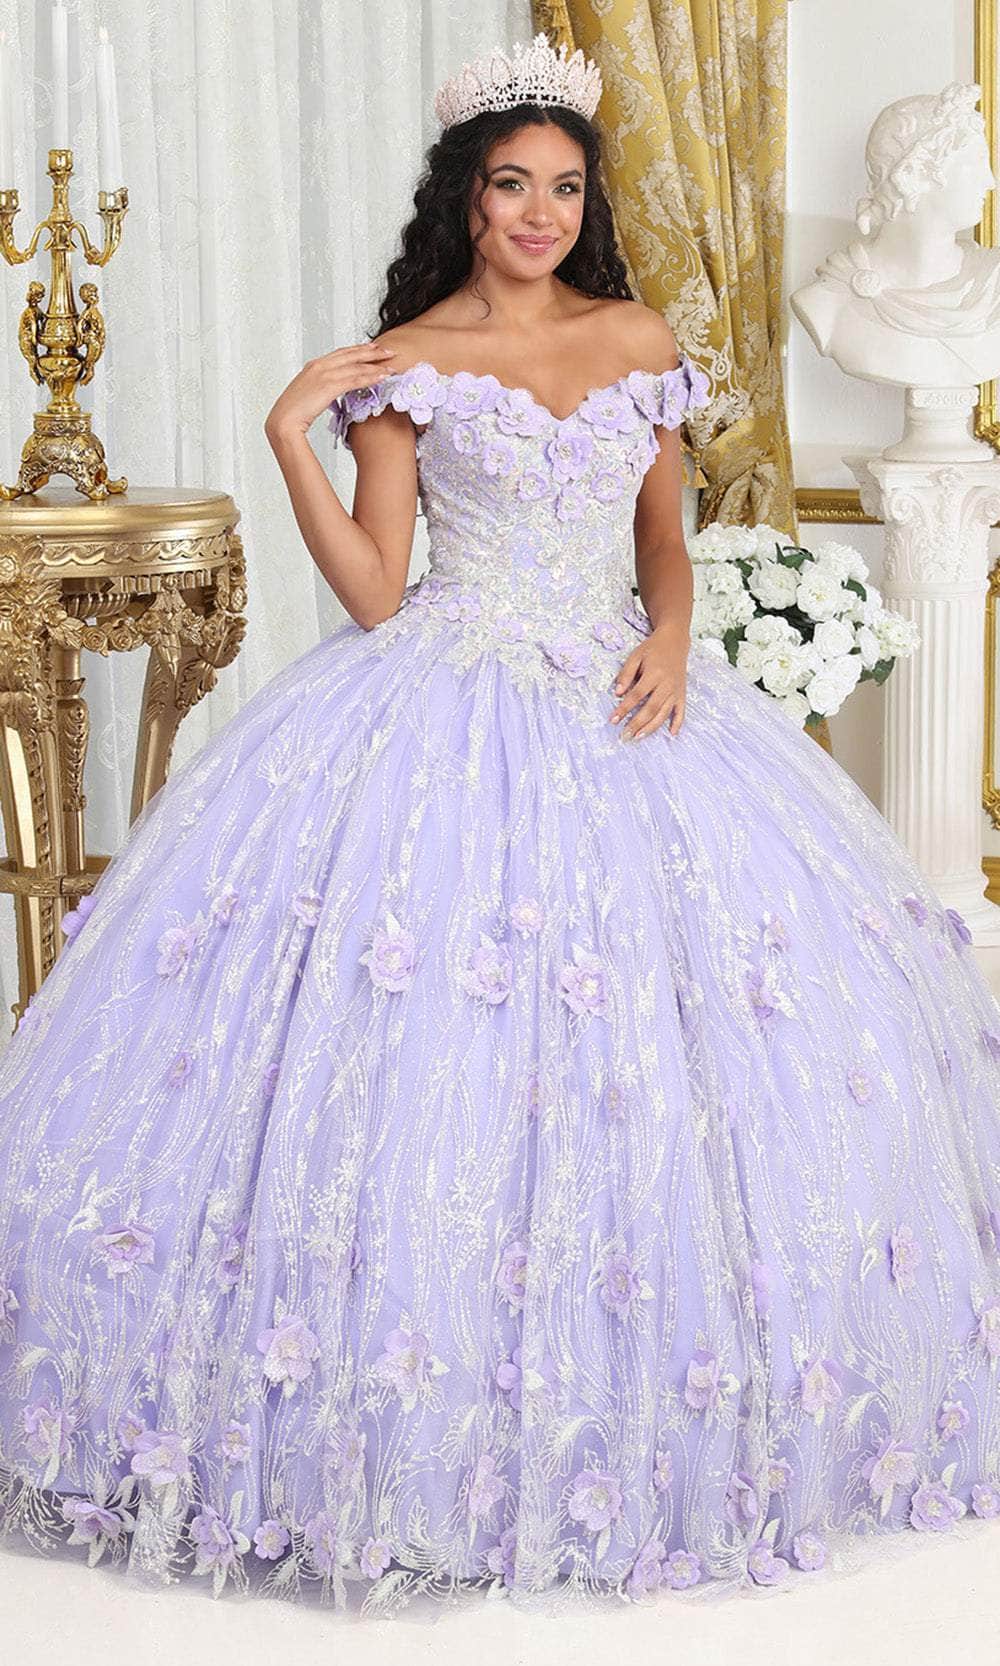 May Queen LK225 - Off Shoulder Floral Ballgown Quinceanera Dresses 4 / Lilac